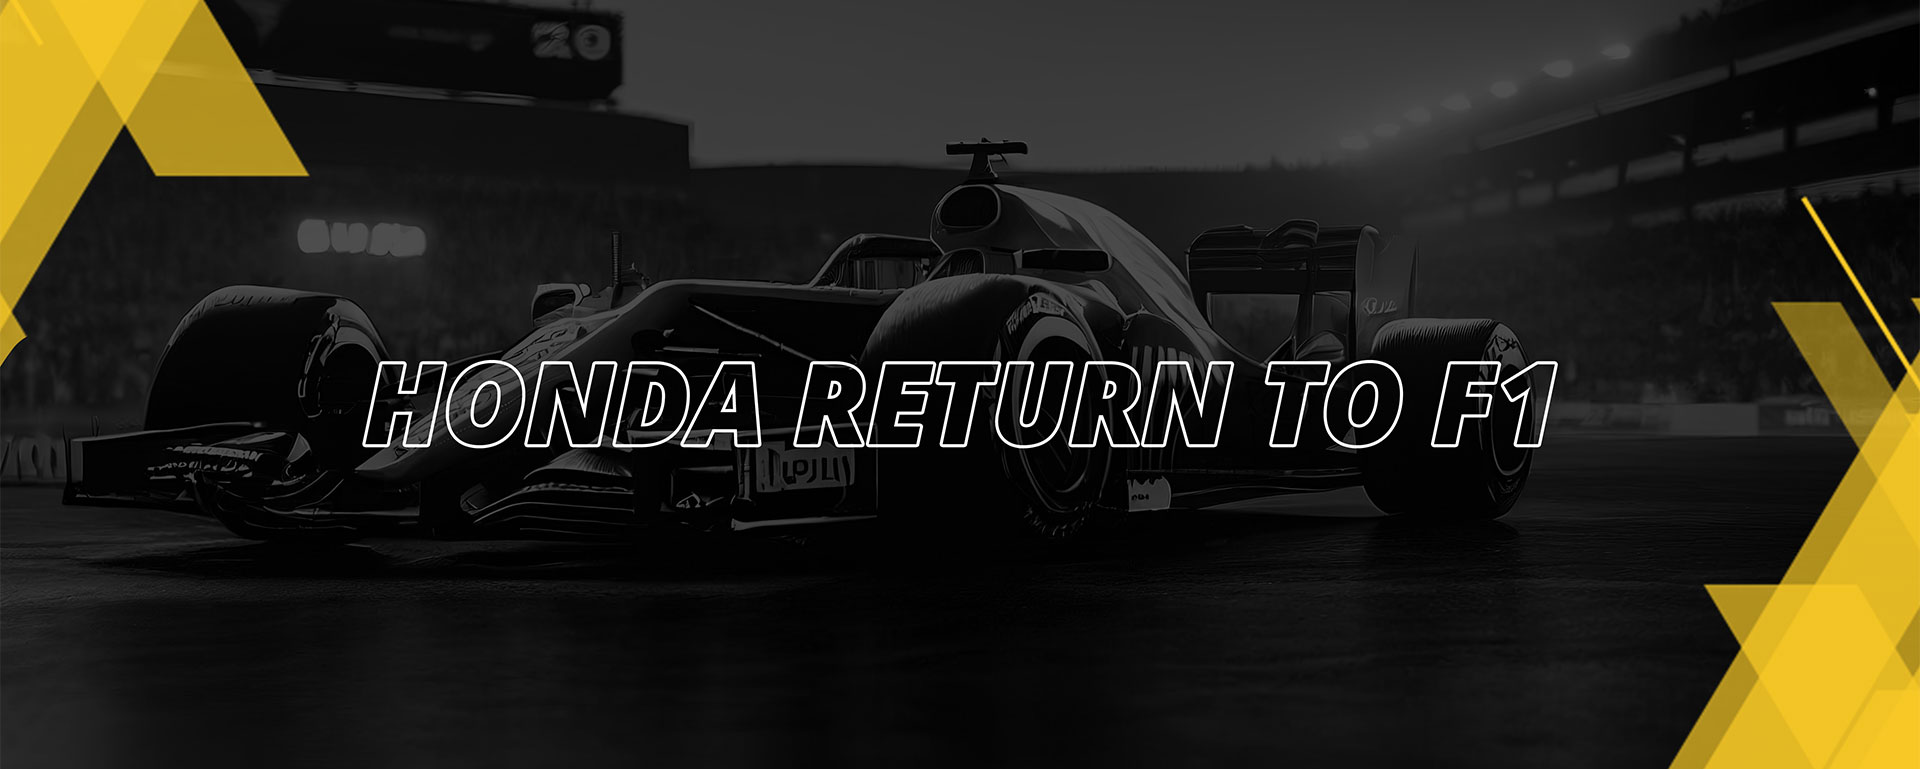 HONDA’S RETURN TO F1